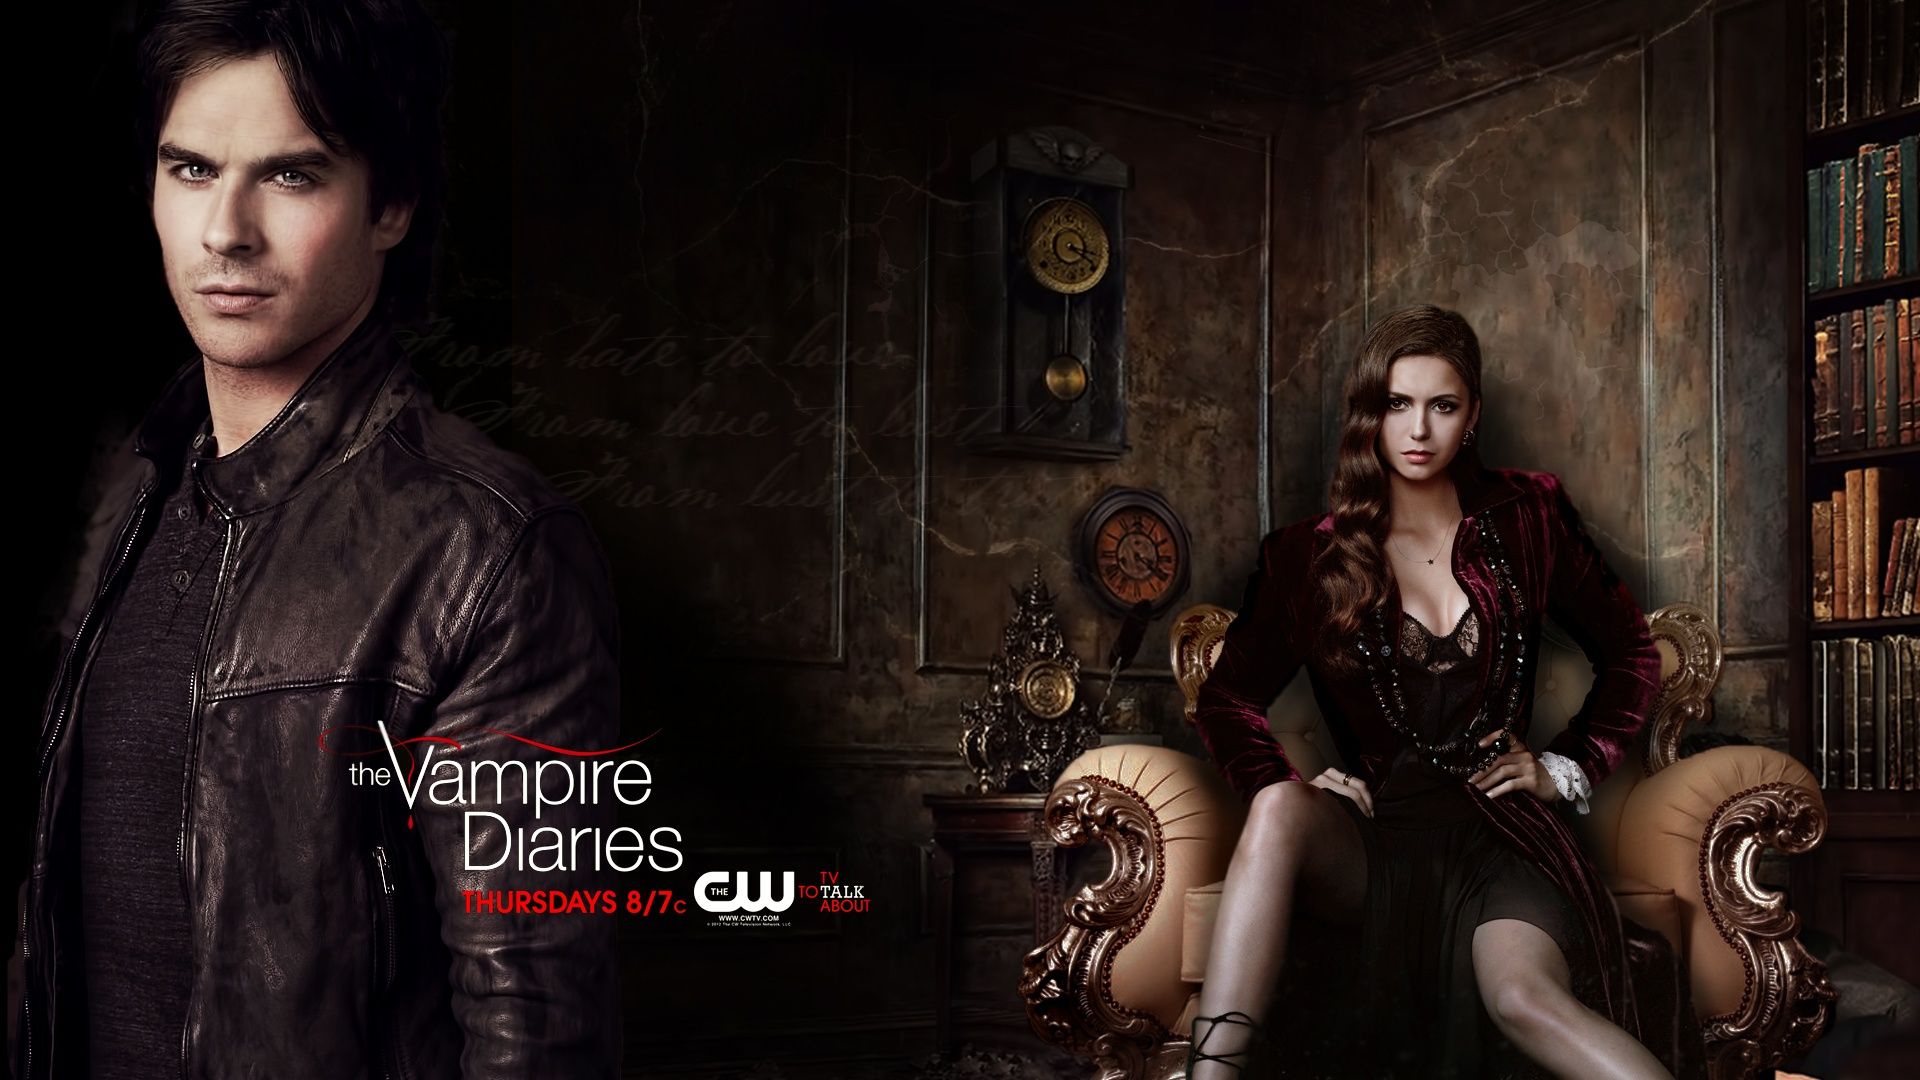 The Vampire Diaries Season 4 Wallpapers | HD Wallpapers